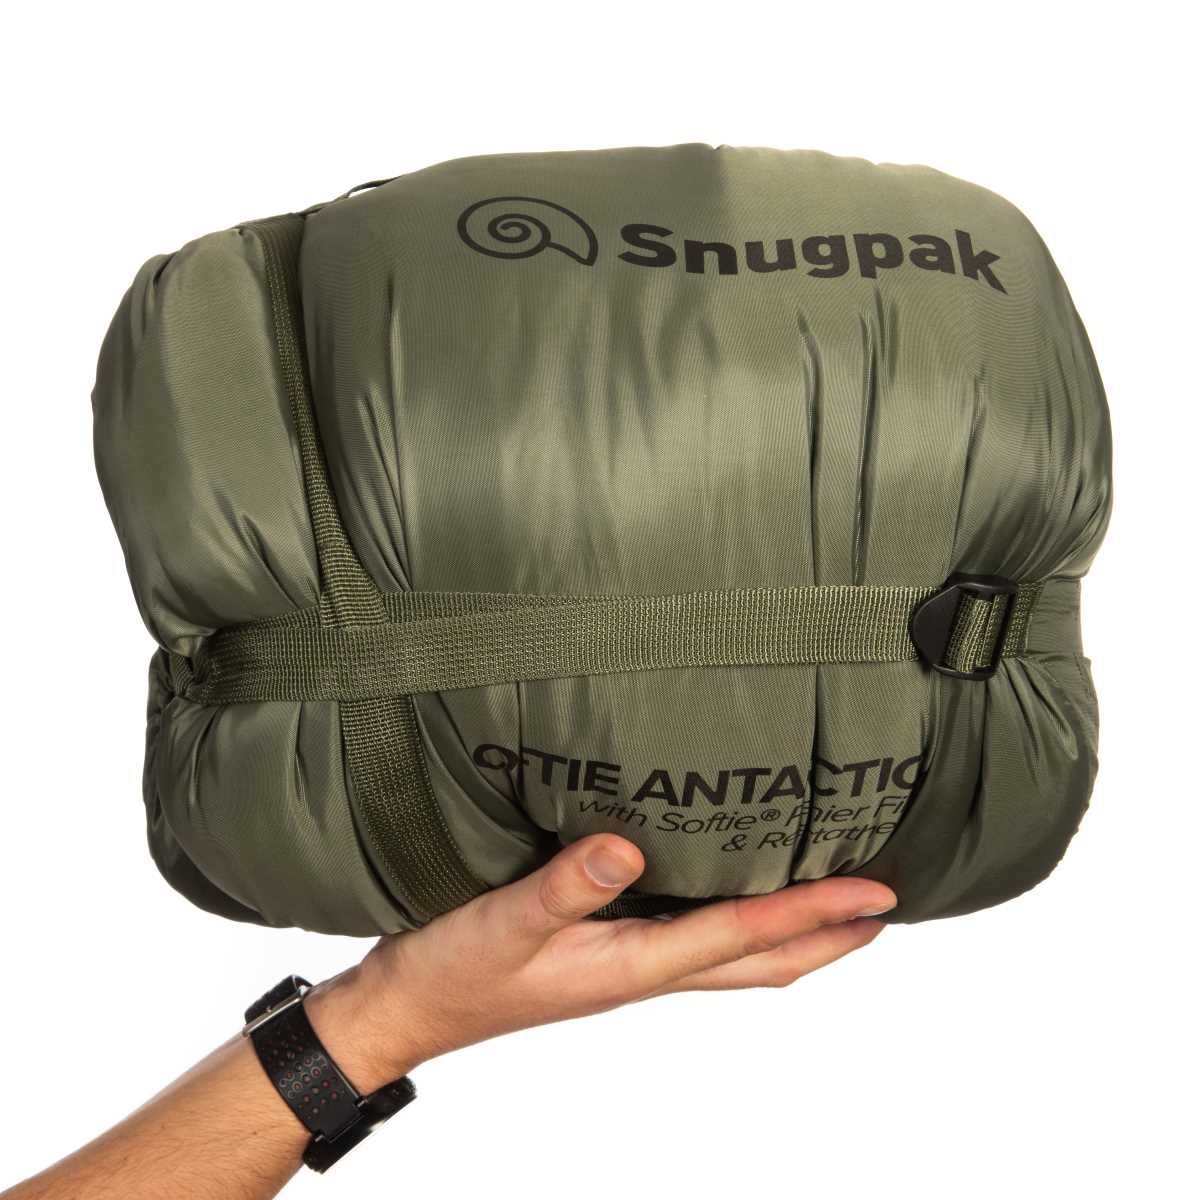 Snugpak Softie 18 Antarctica RE Sleeping Bag Military Army Synthetic